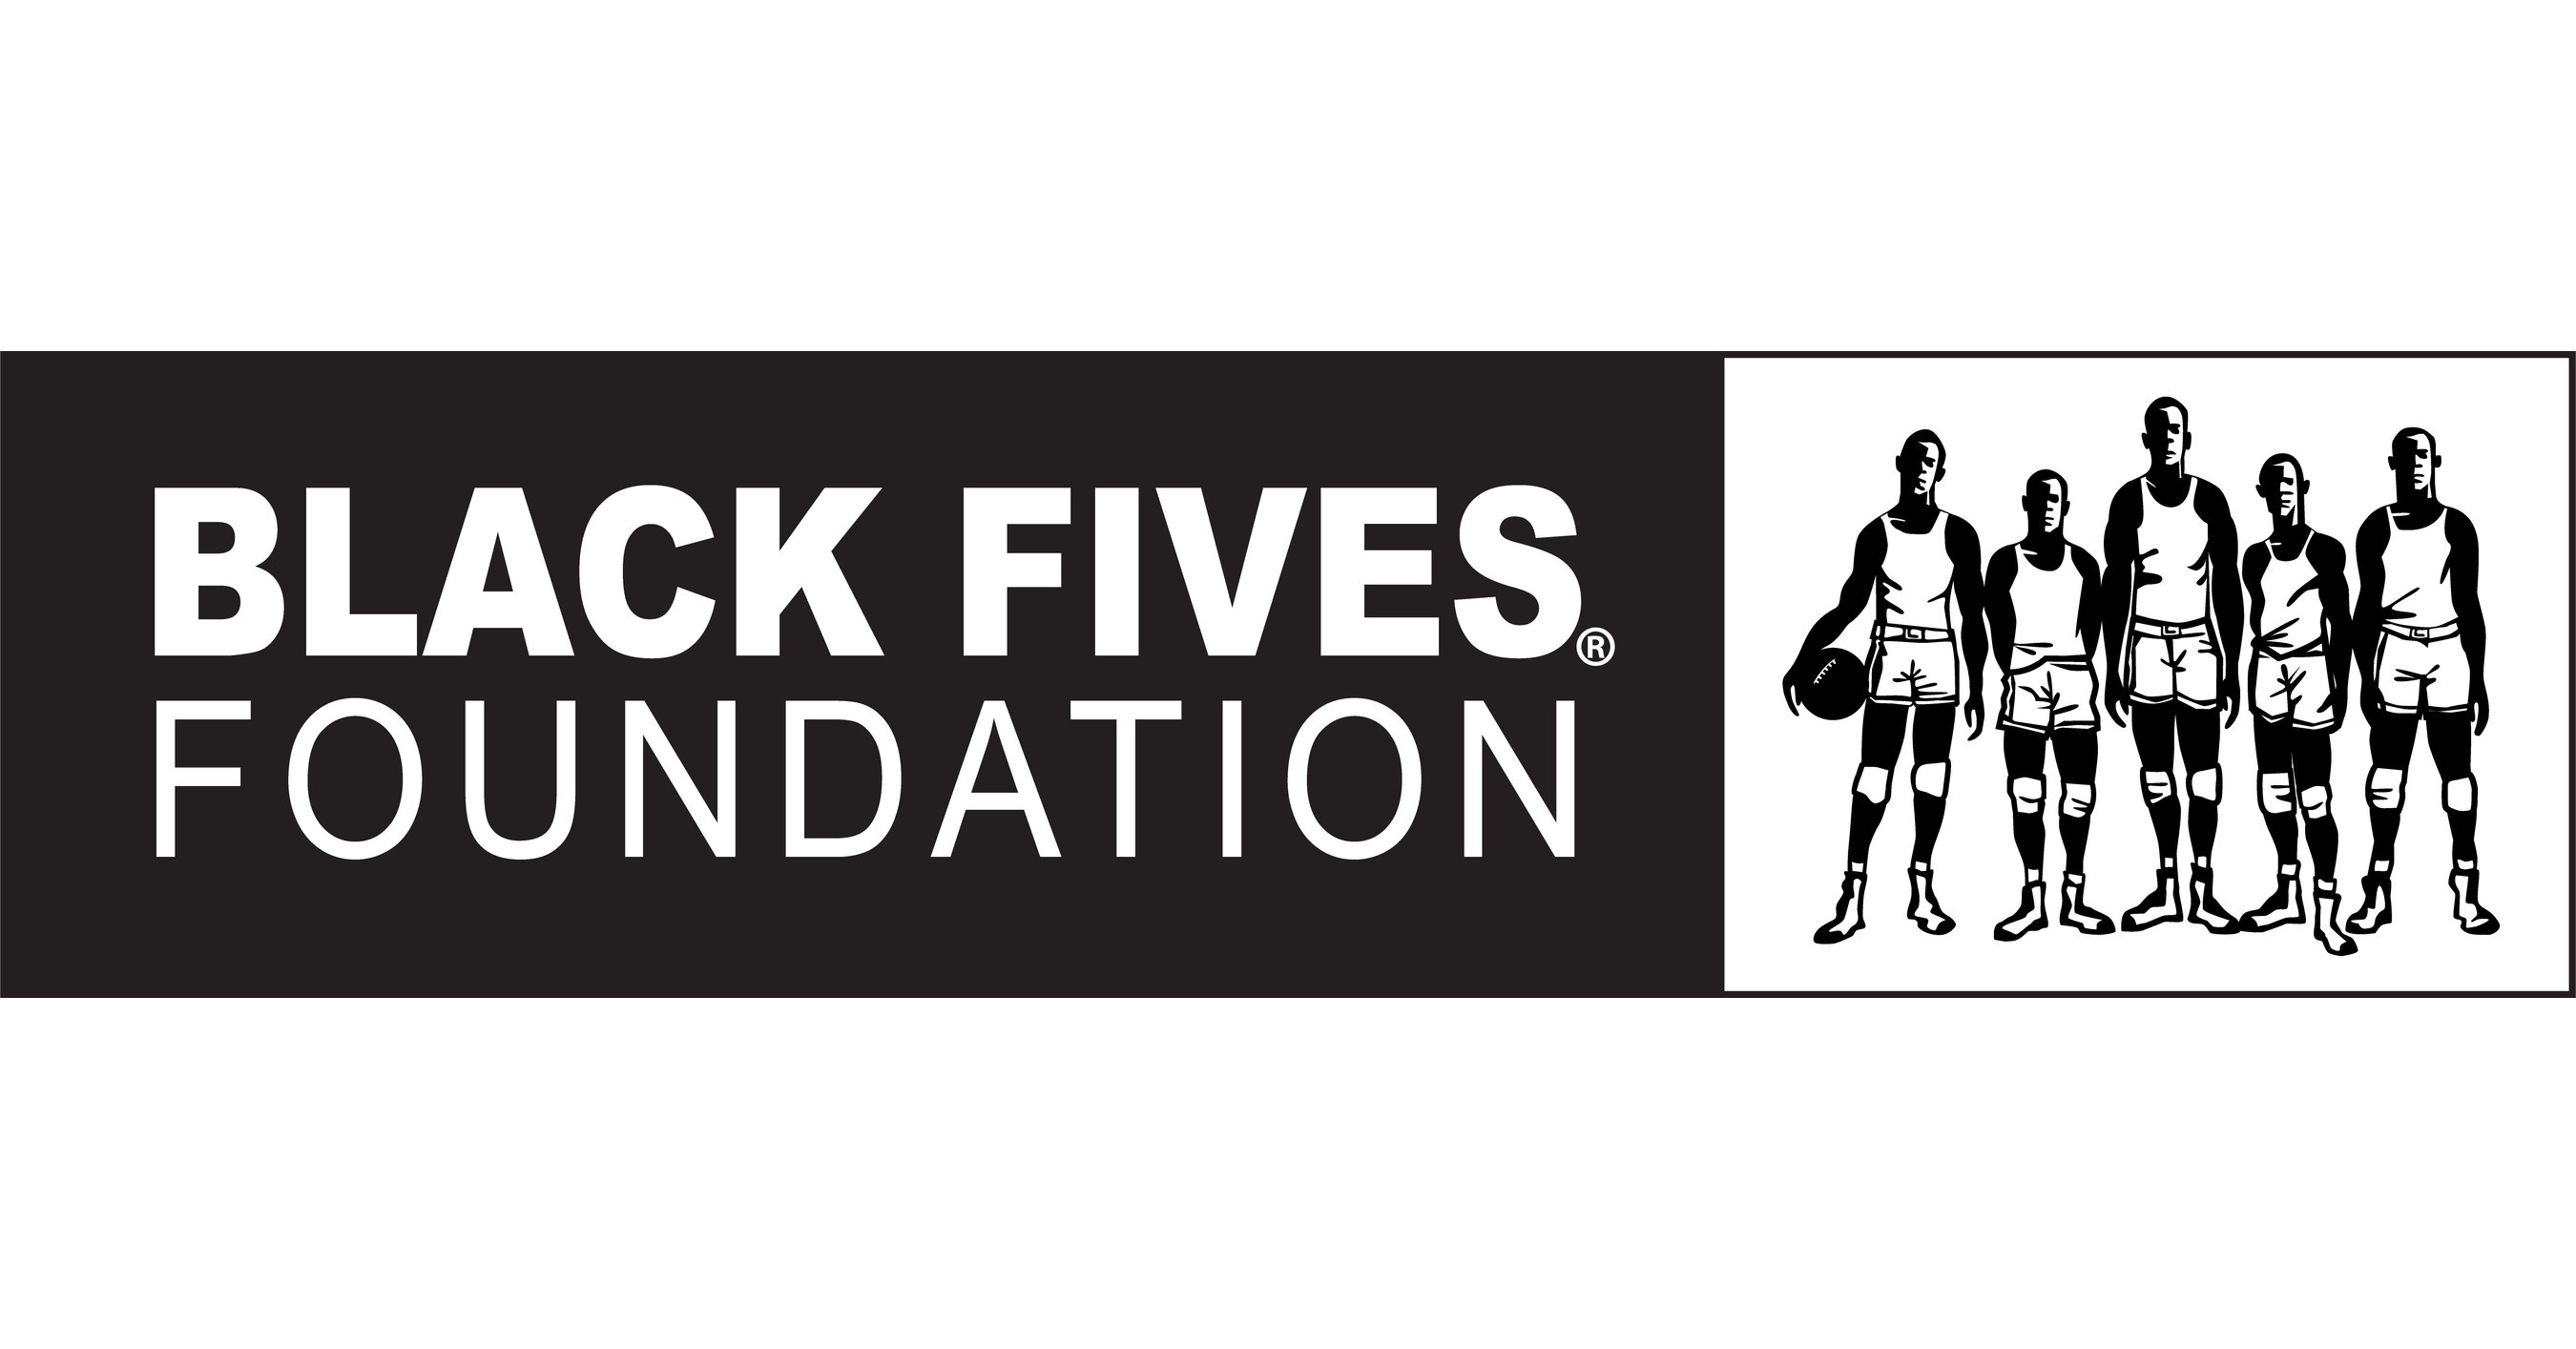 Savoy Big Five  The Black Fives Foundation